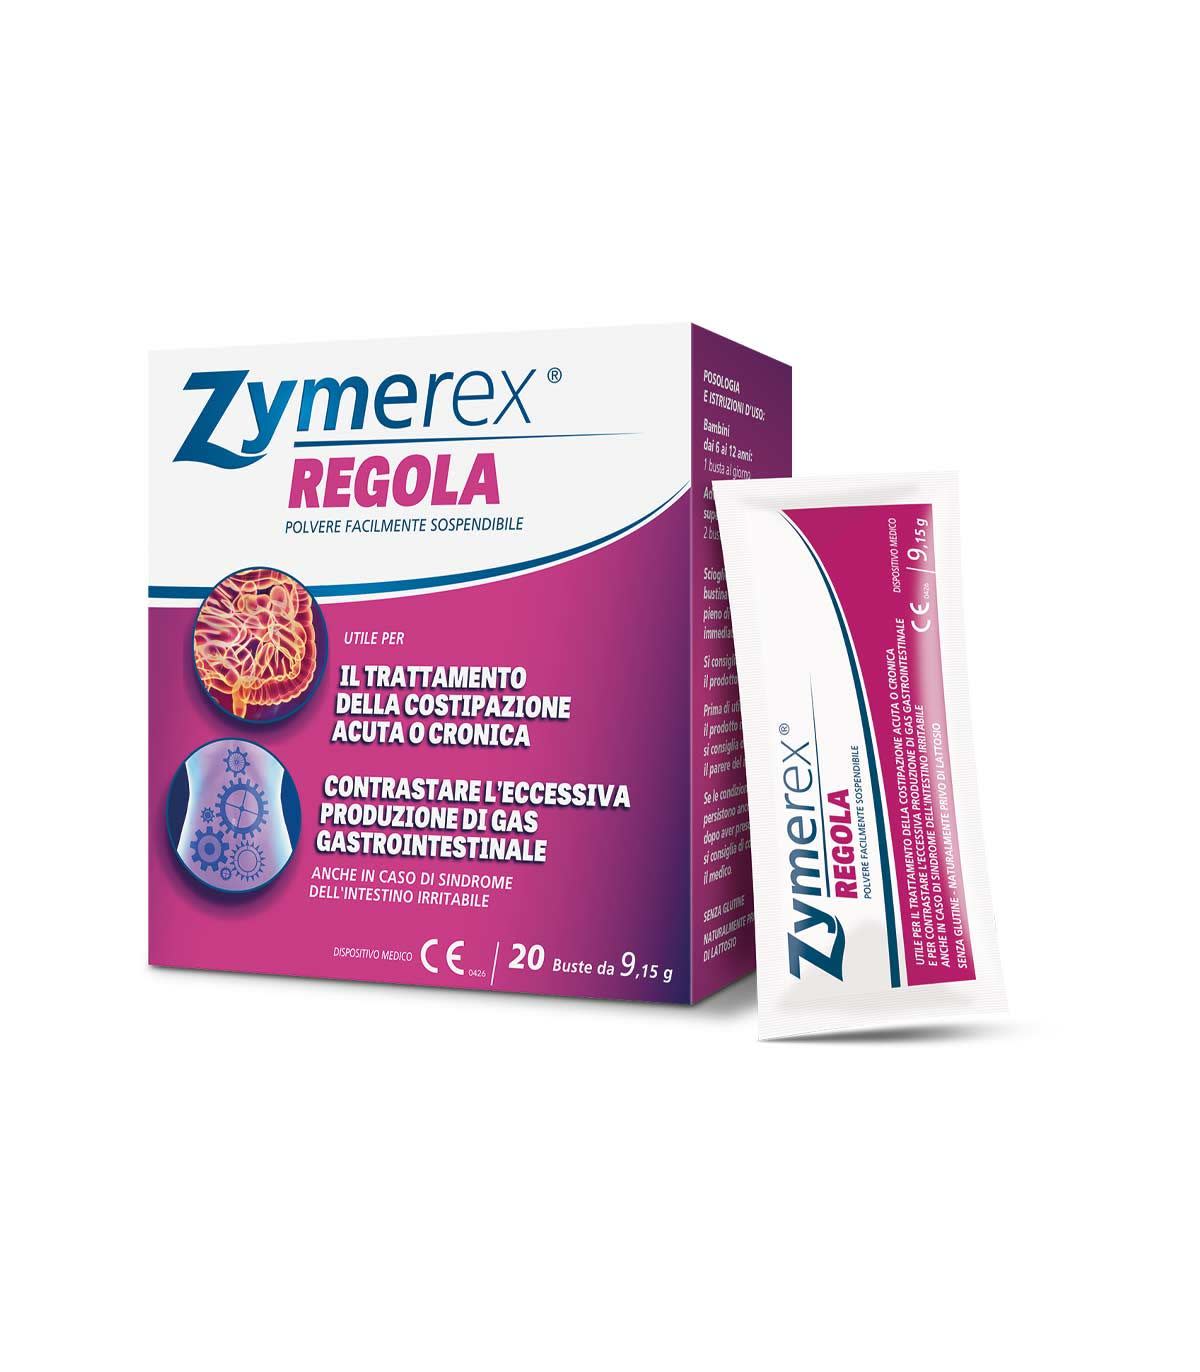 981047133 - Zymerex Regola Integratore regolarità intestinale 20 buste - 4737120_2.jpg